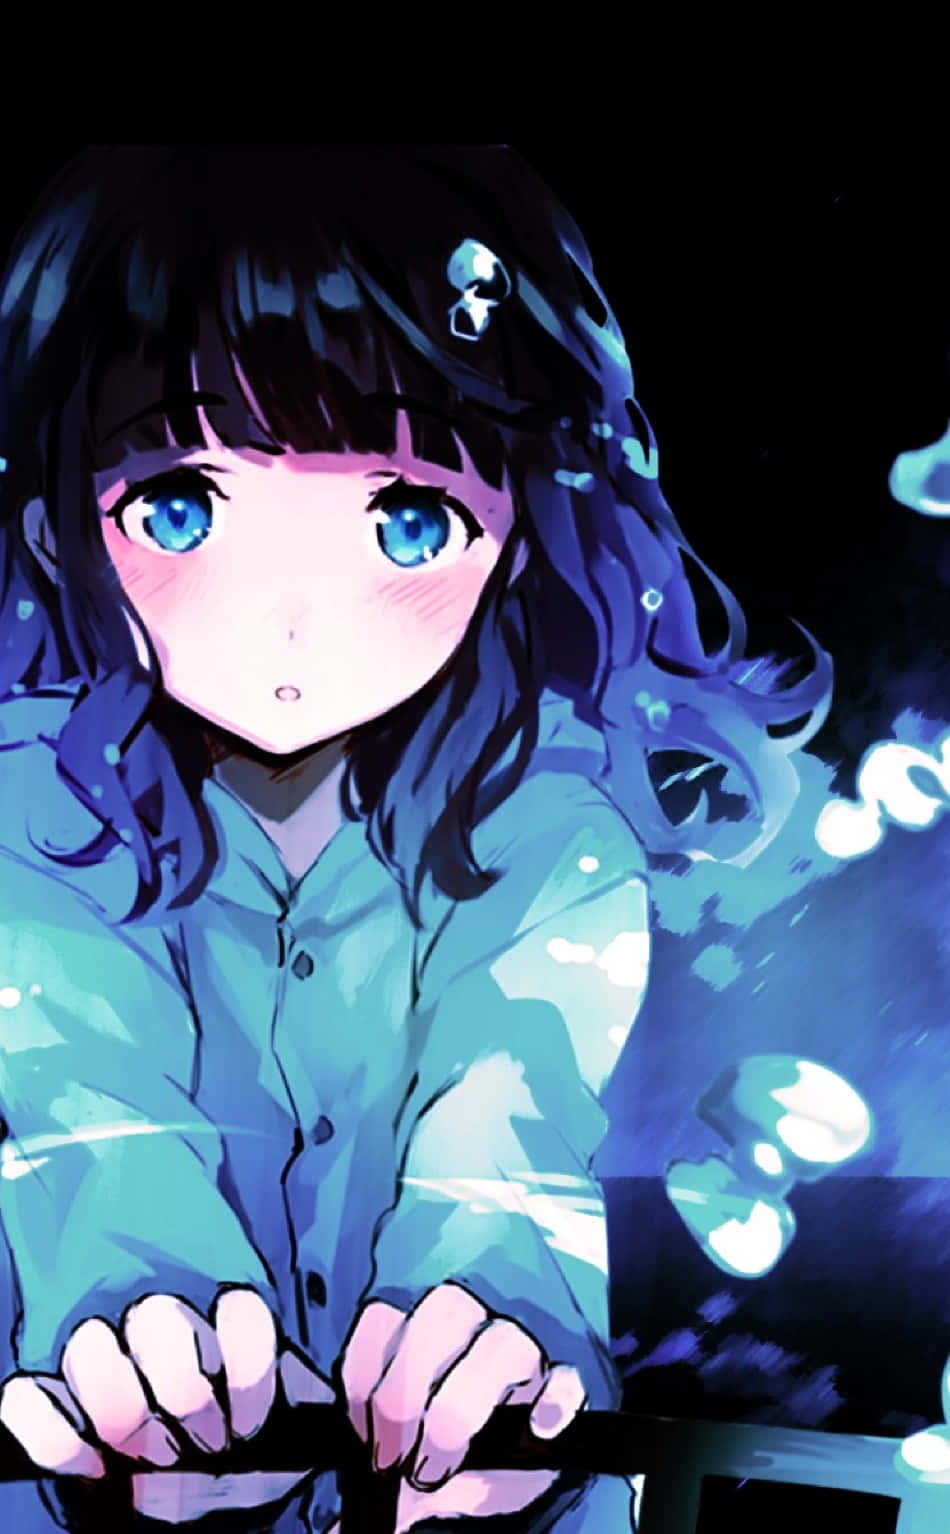 Sad Depressing Anime Girl Falling Tears Wallpaper